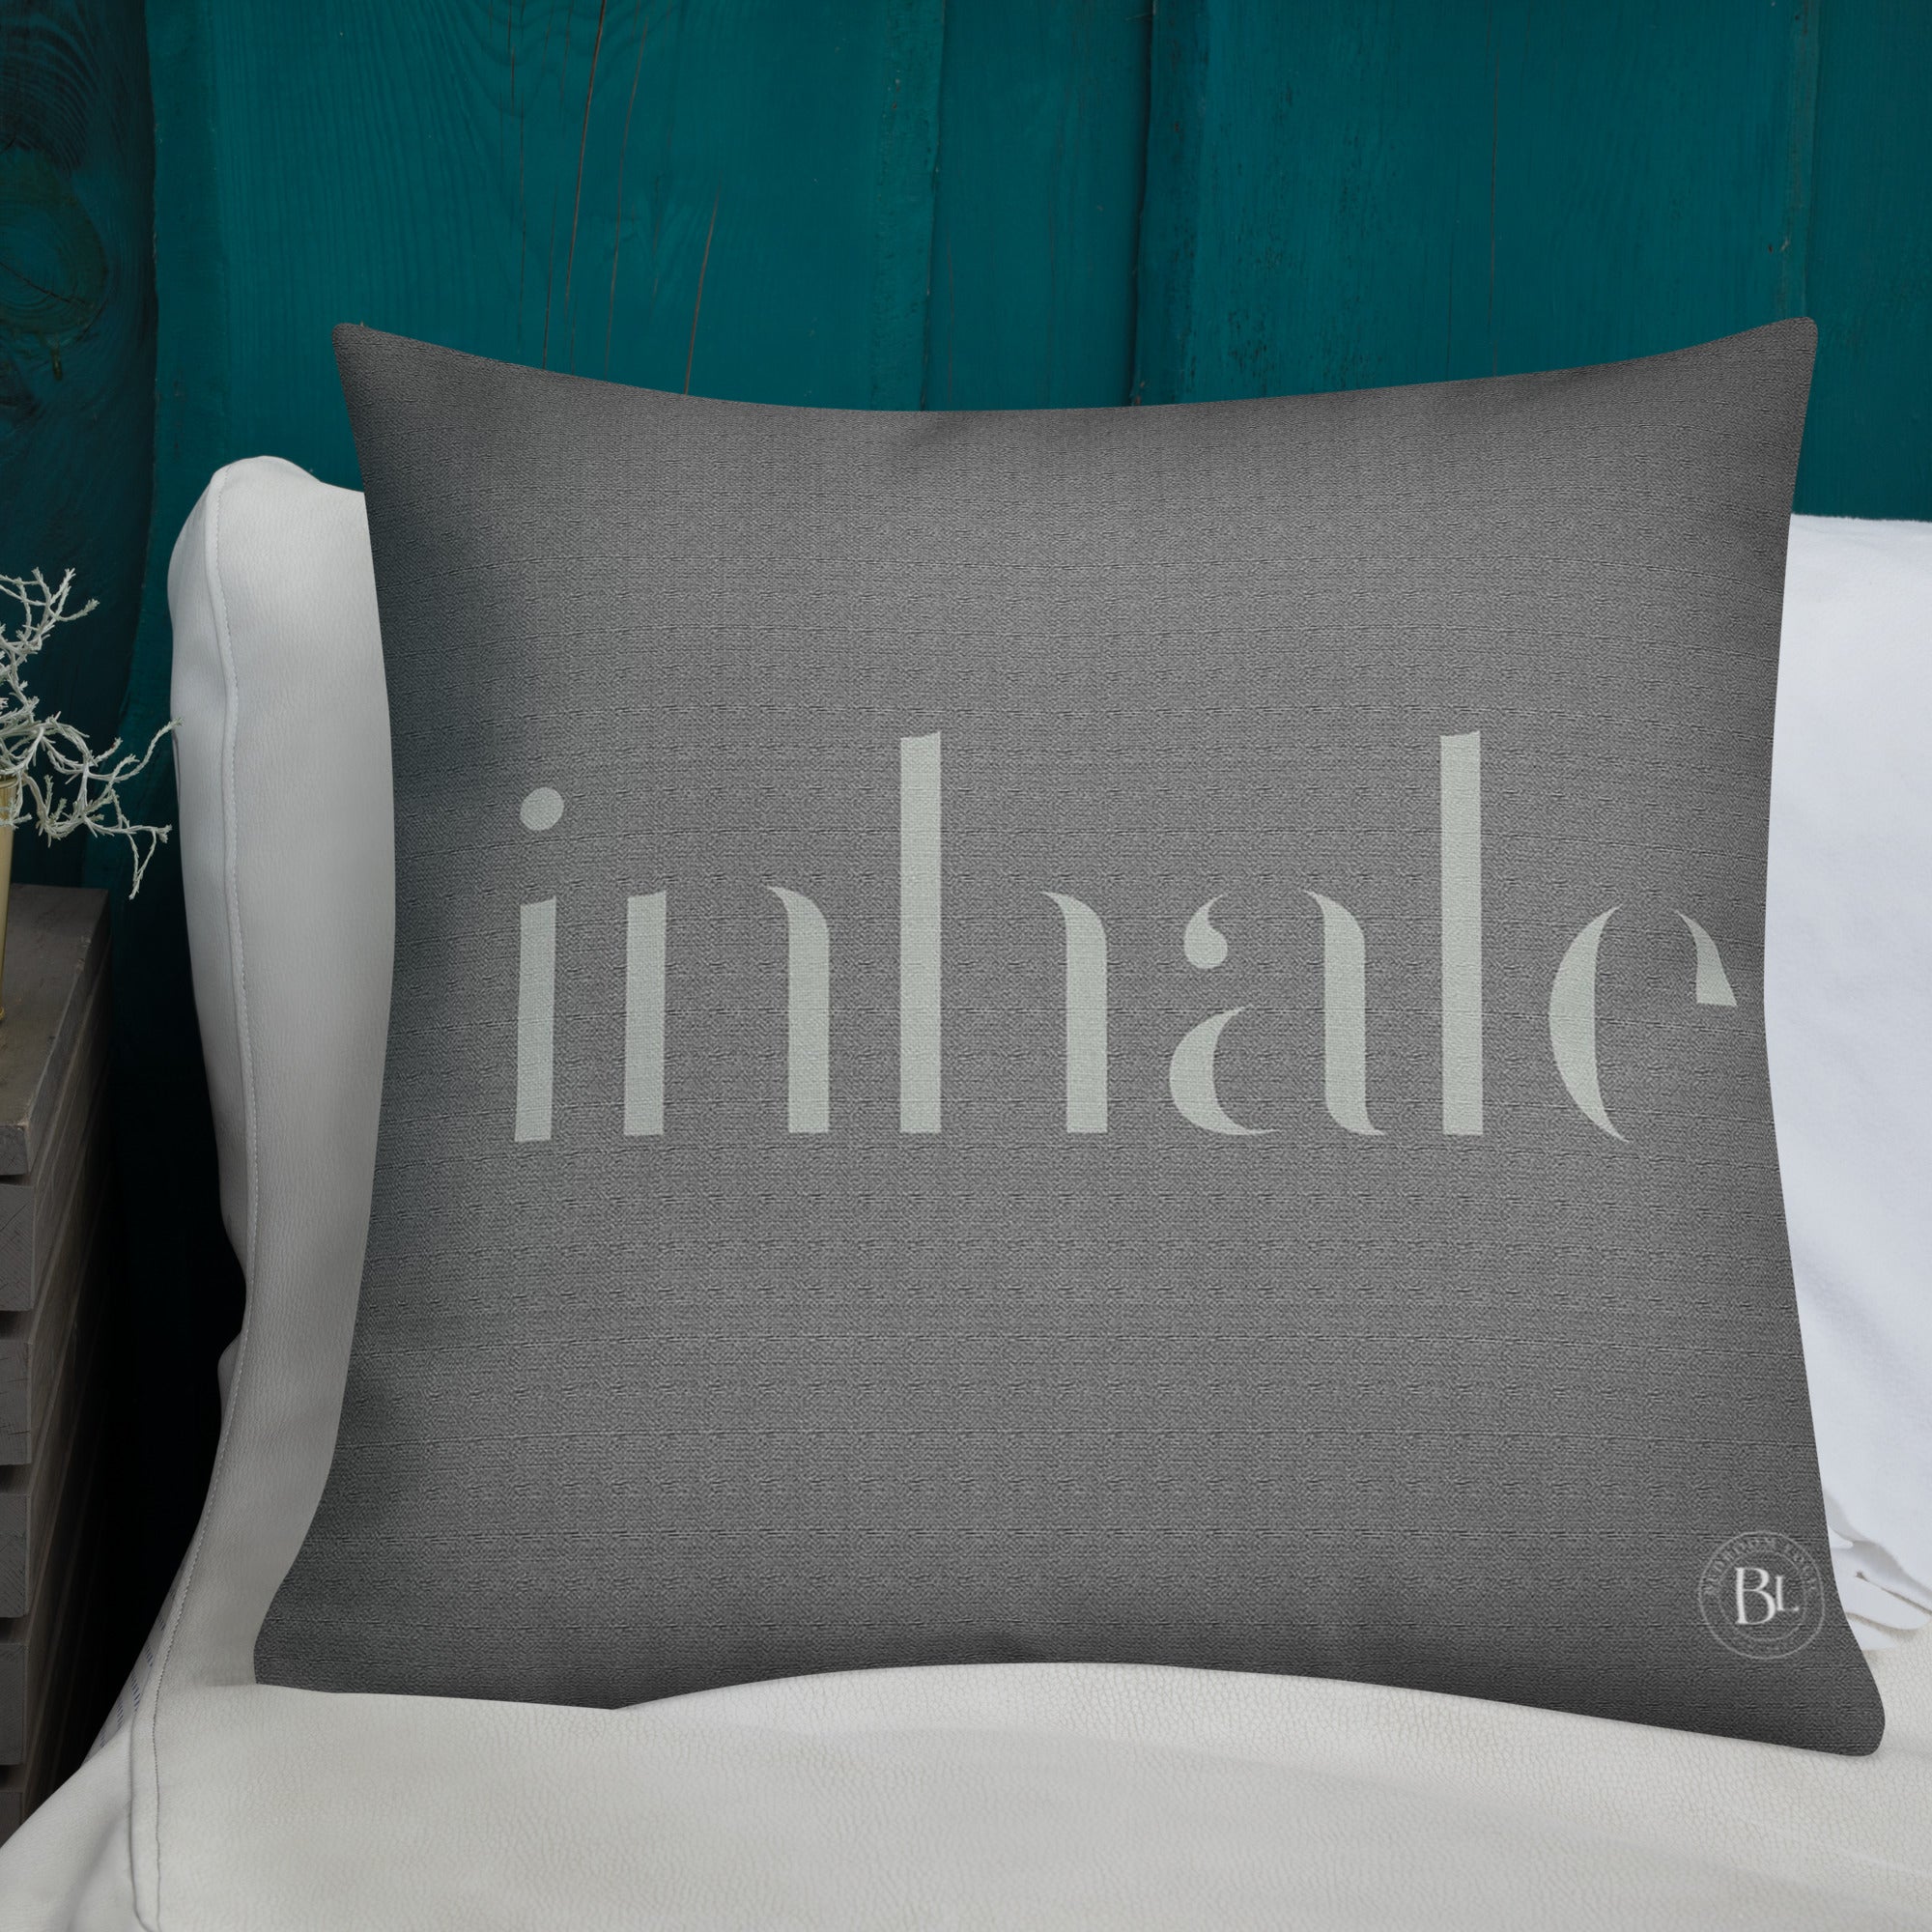 Inhale - Premium Throw Pillow